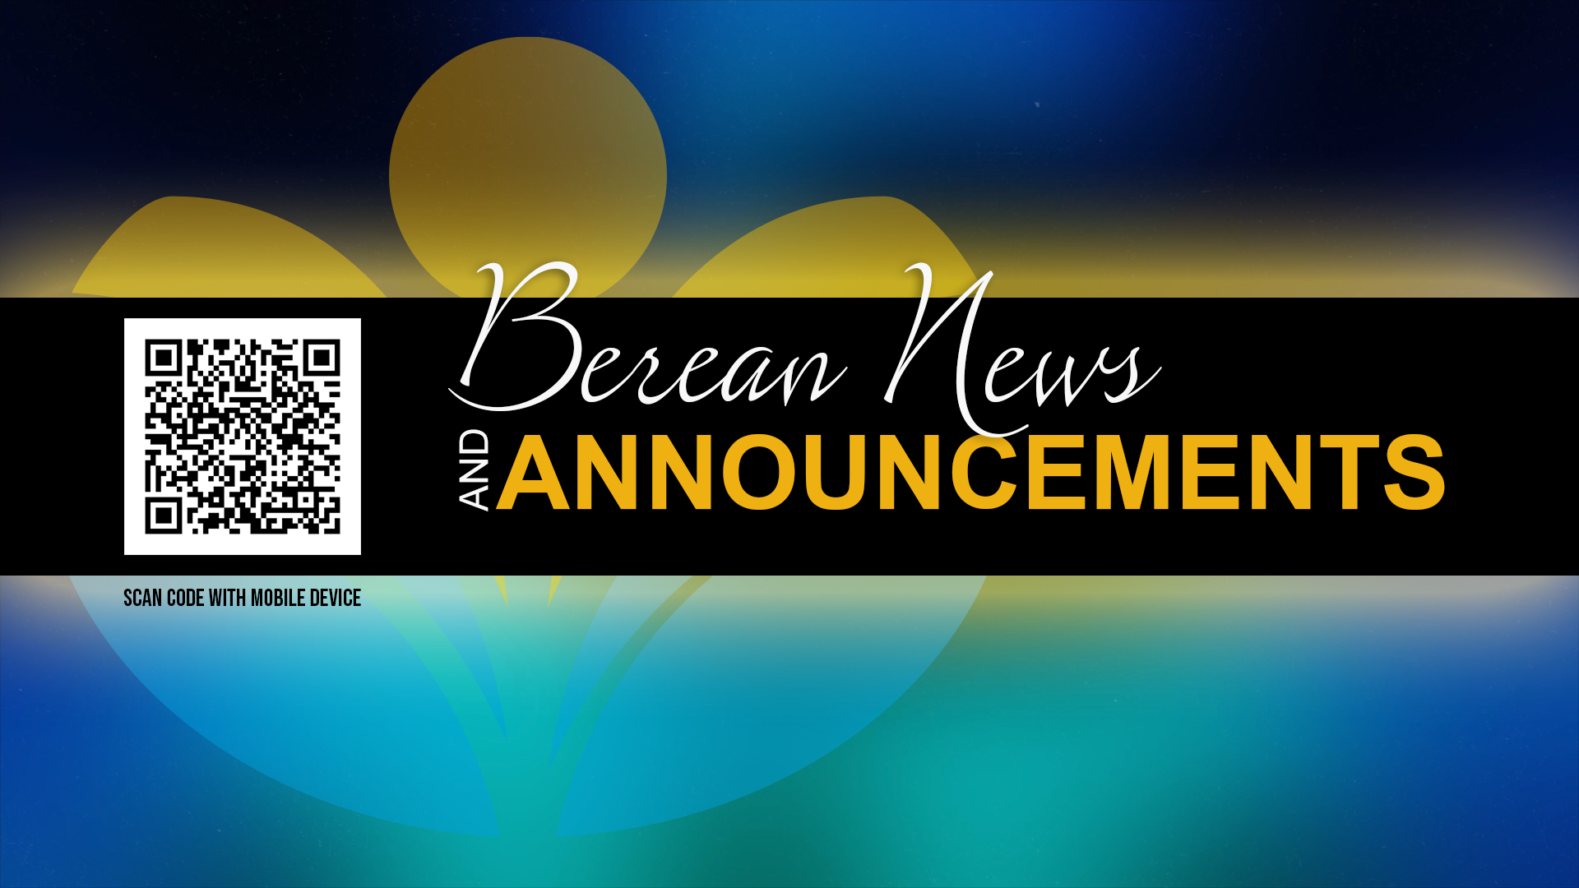 Berean-news-announcements